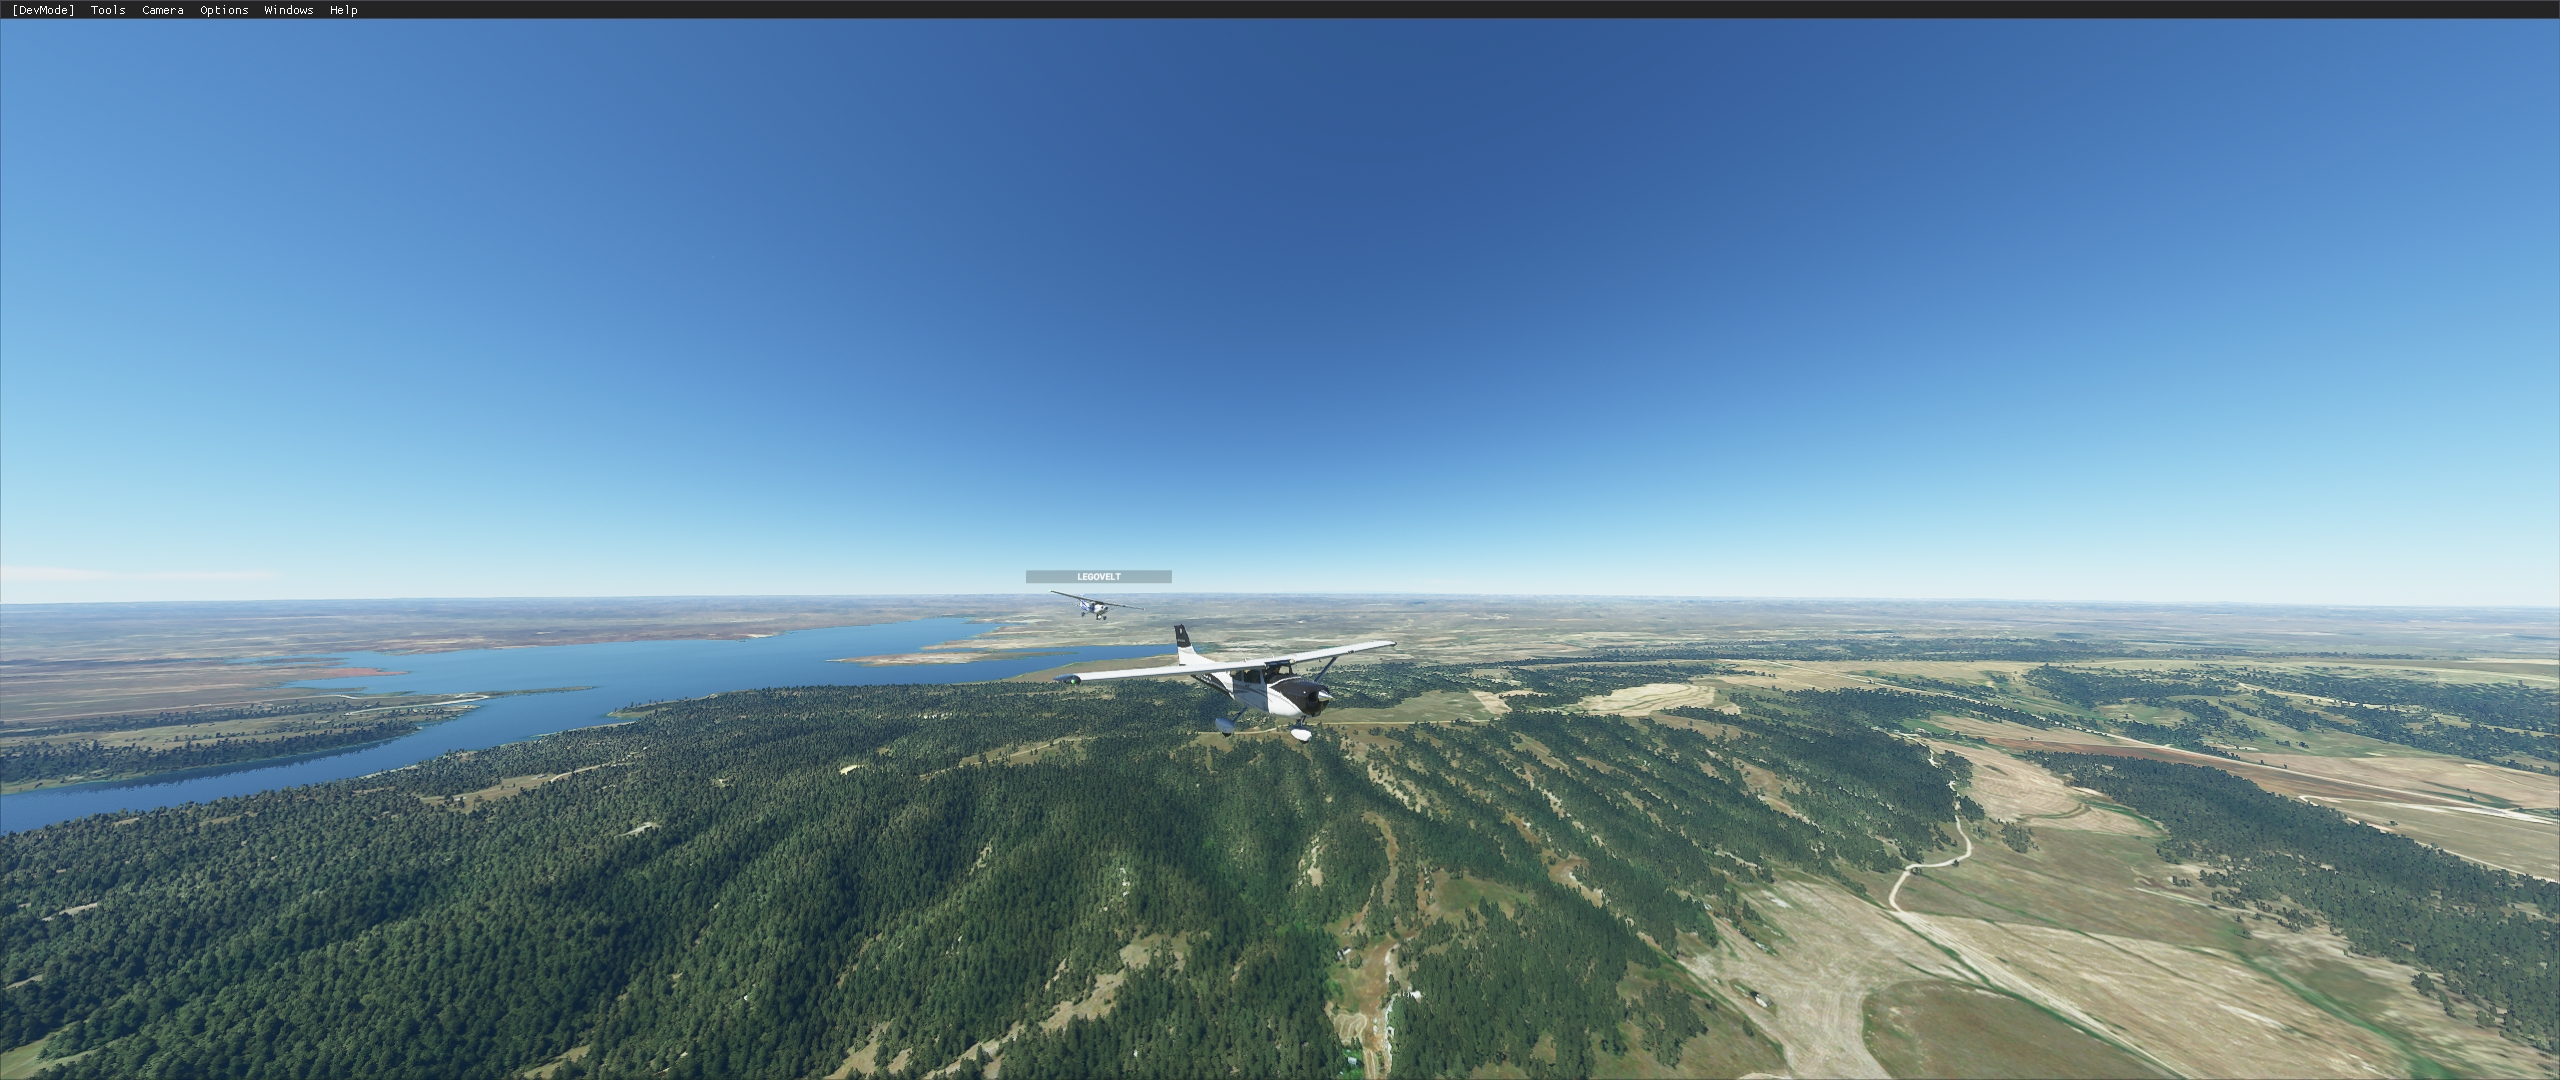 2020-08-25 19_08_07-Microsoft Flight Simulator - 1.7.12.0.jpg